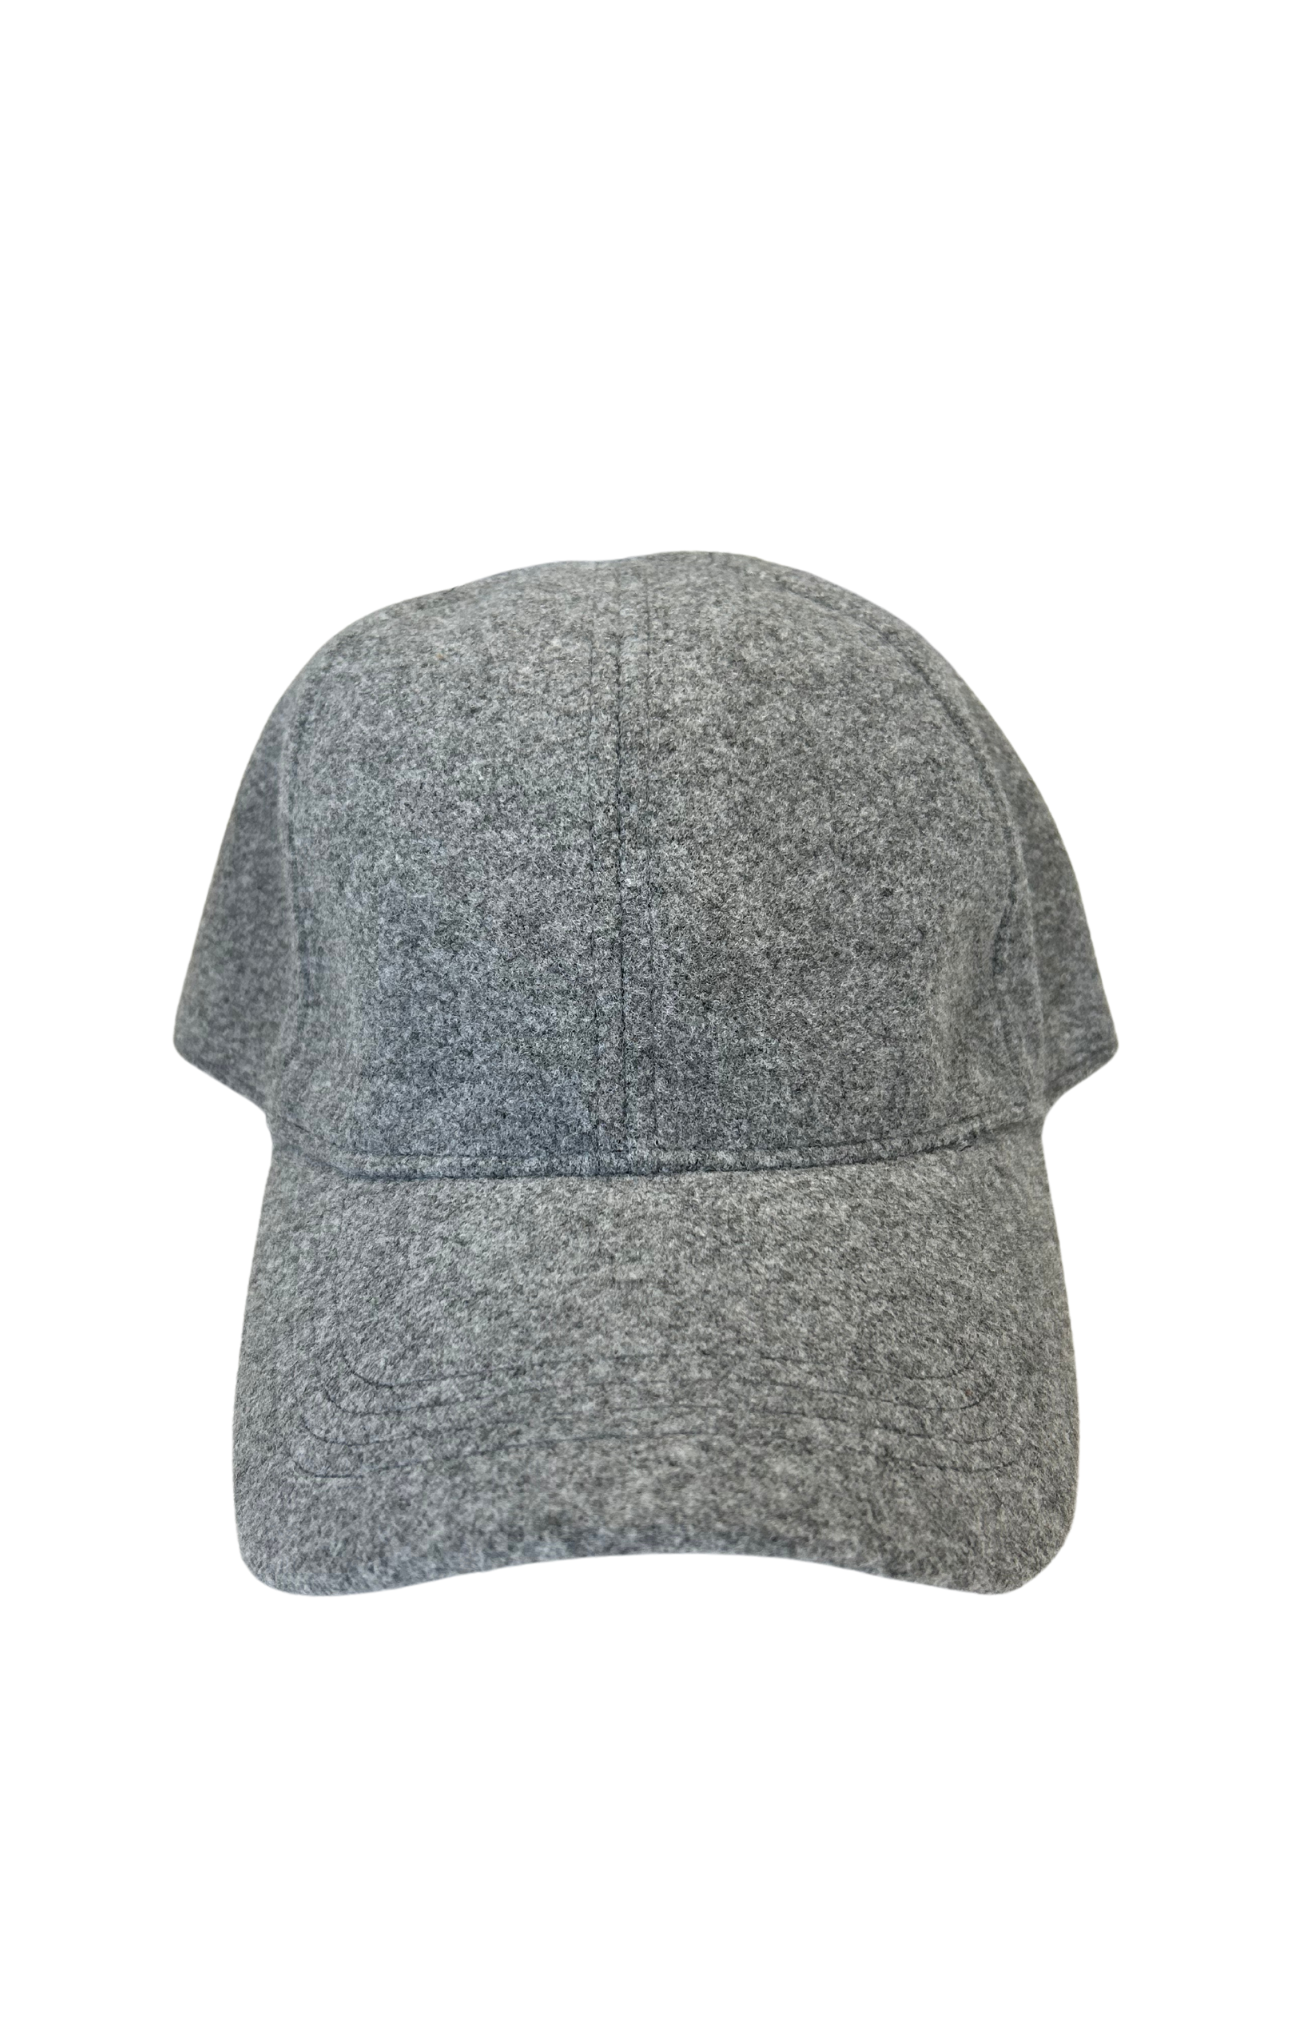 SOLID WOOL TOUCH BASEBALL CAP-,grey,beige,wool,baseball cap,solid